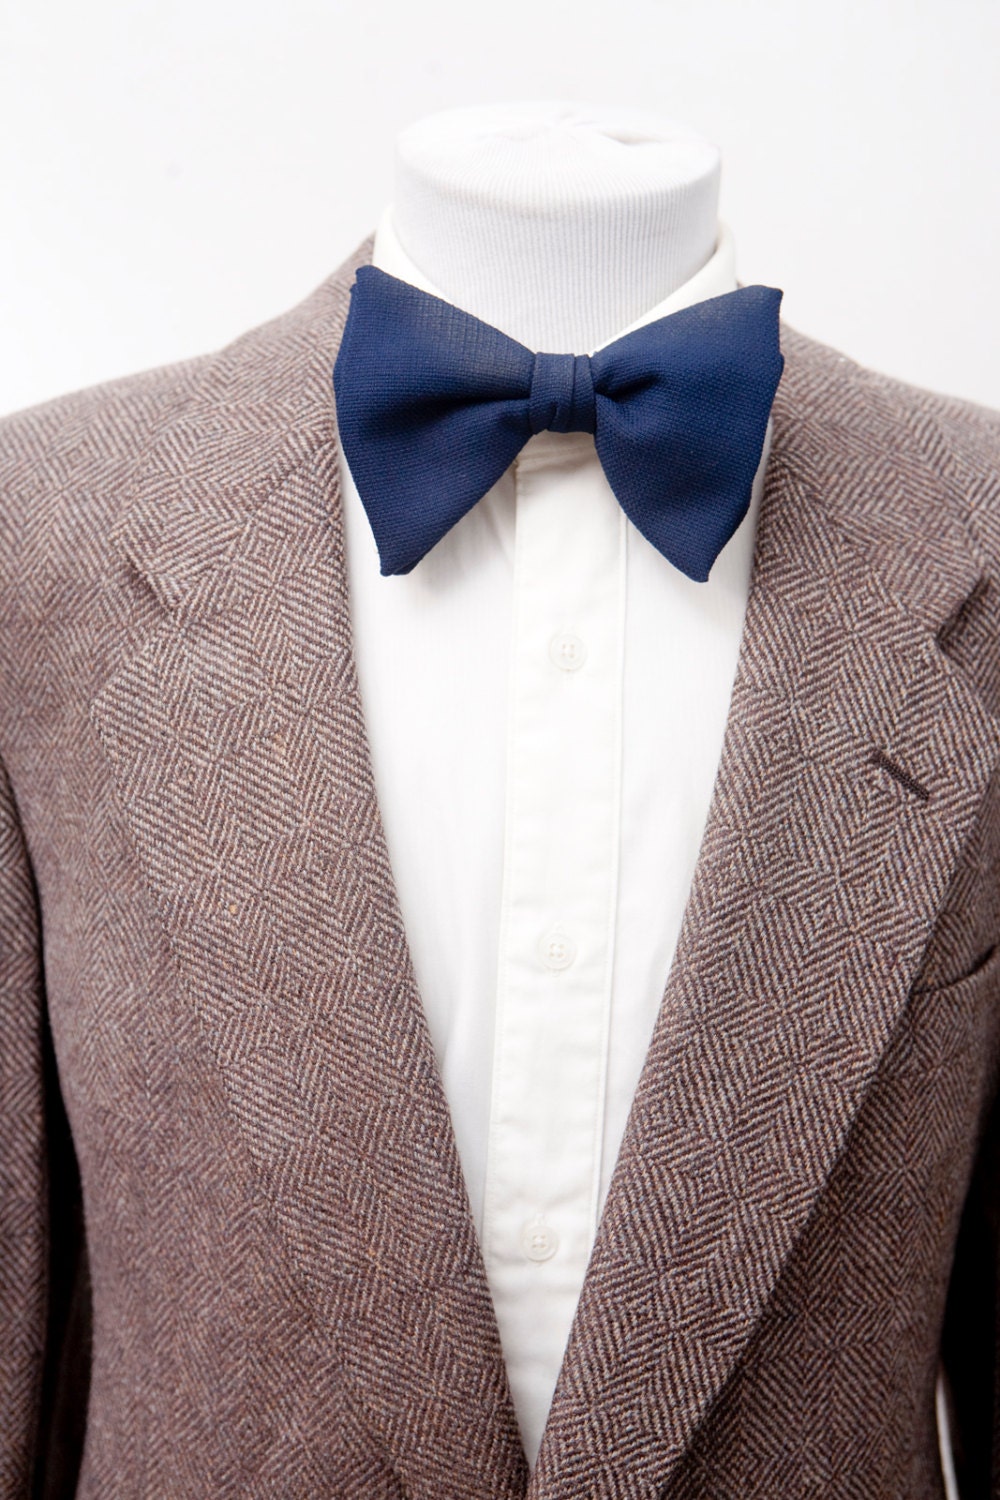 Men's Blazer / Vintage Christian Dior Brown Wool Jacket / - Etsy